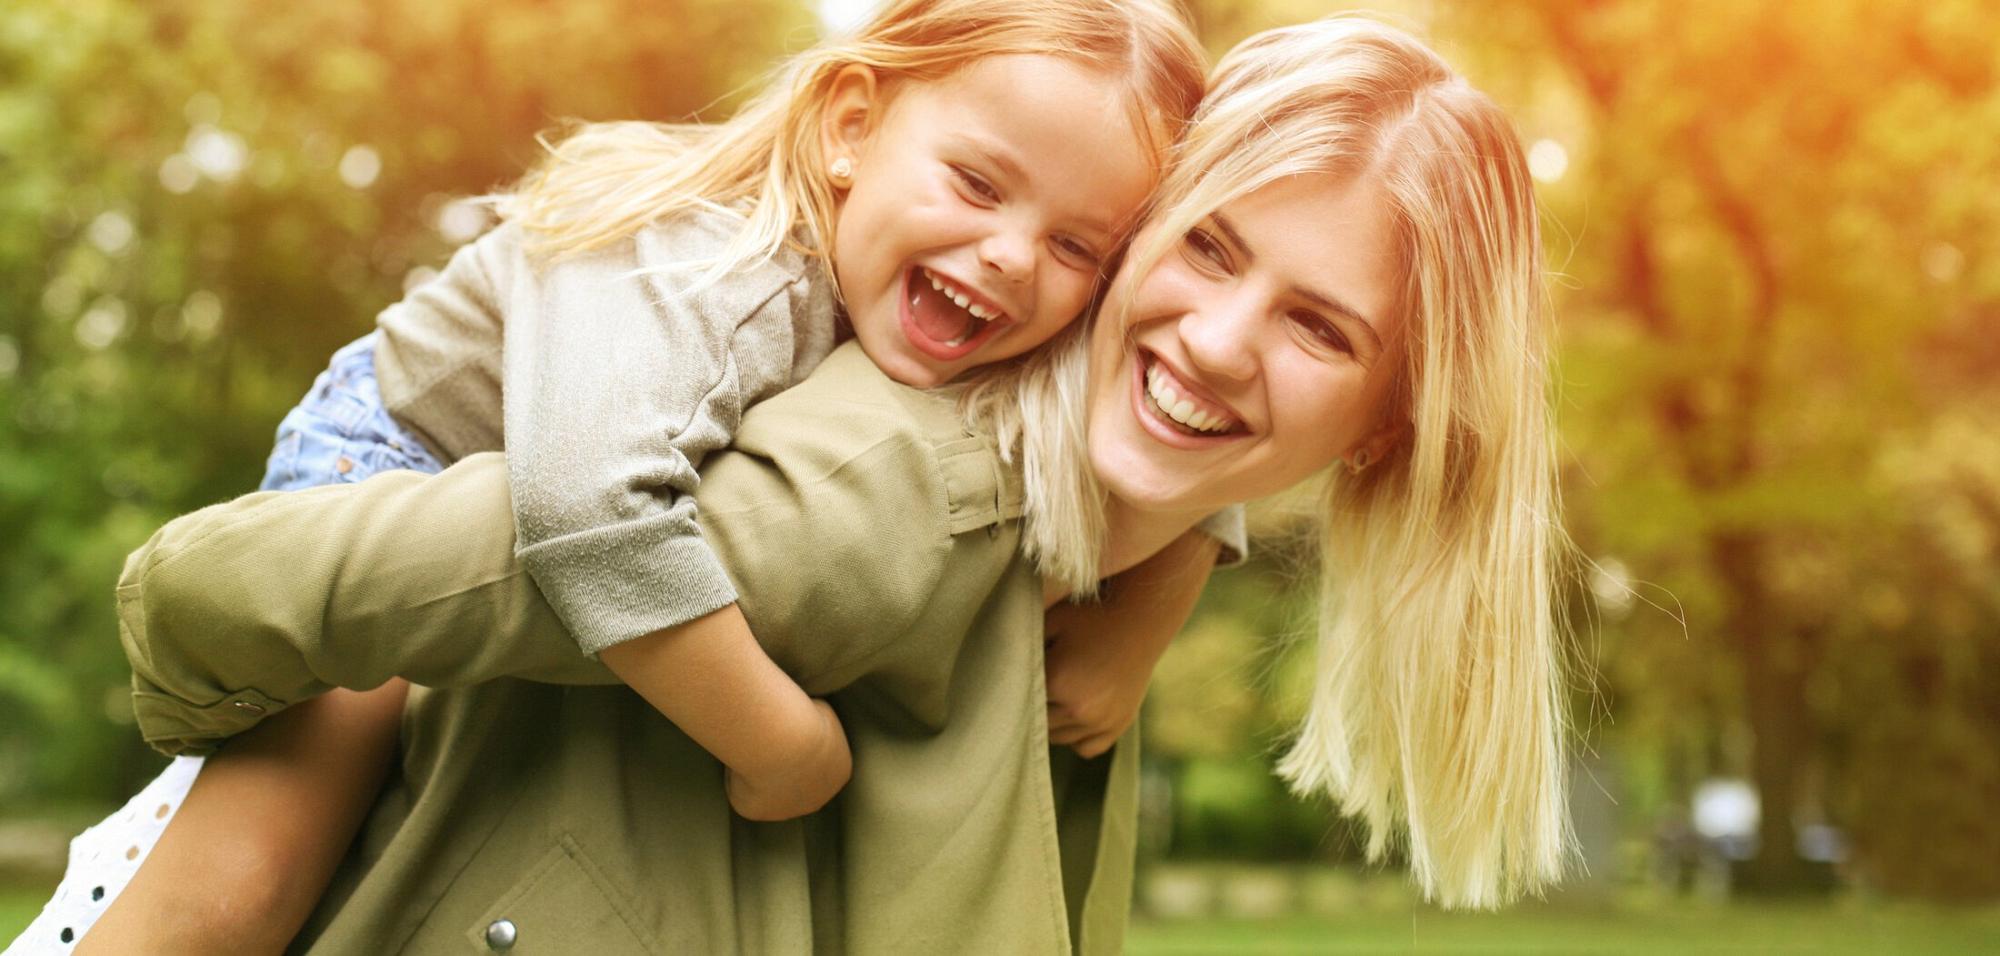 Pasadena Orthodontics models Woman and Daughter smiling